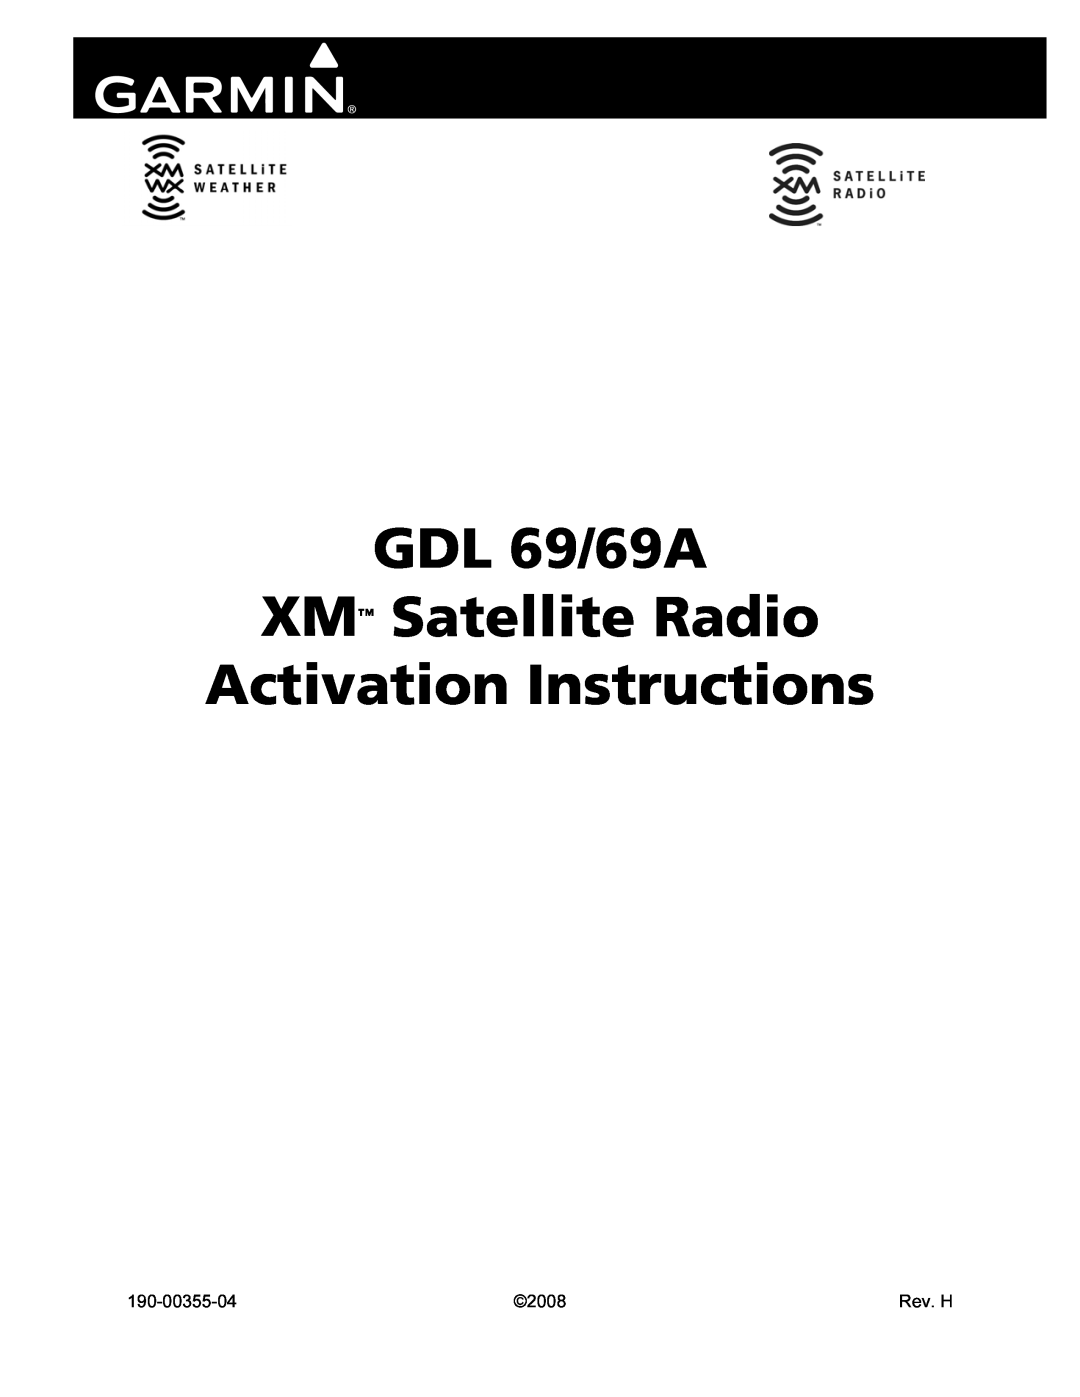 Garmin manual GDL 69/69A XM Satellite Radio, Activation Instructions, 190-00355-04, 2008, Rev. H 